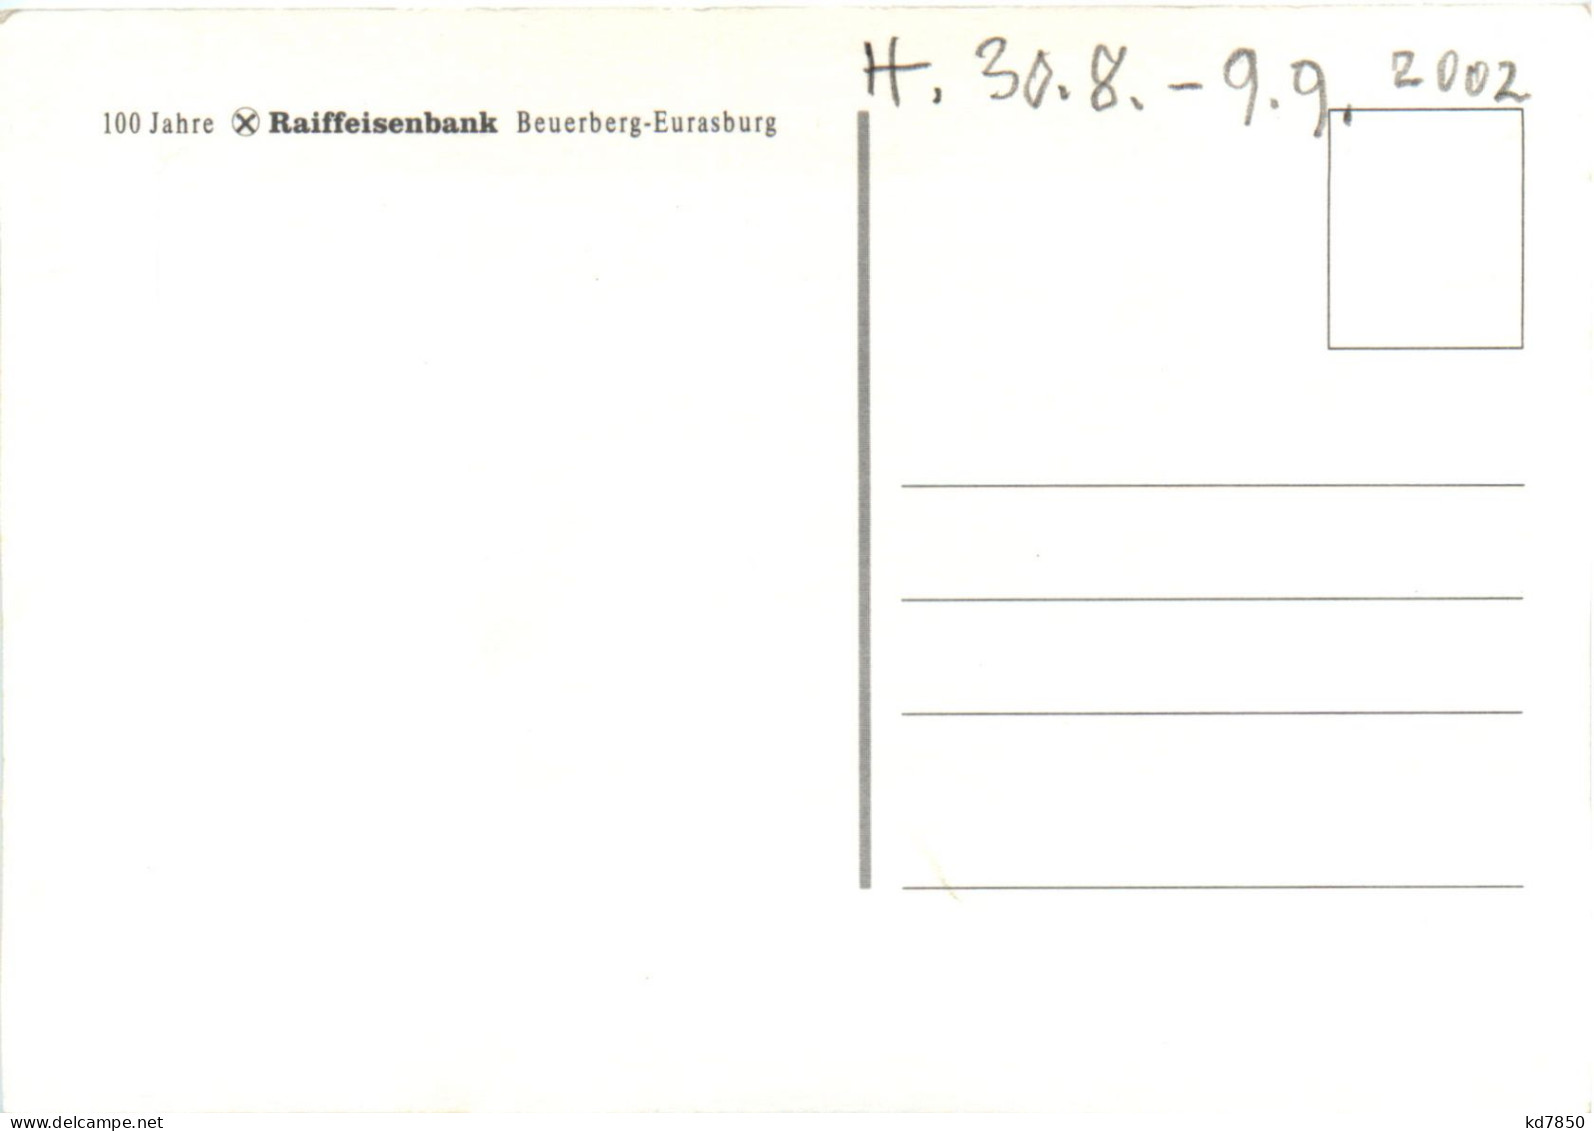 100 Jahre Raiffeisenbank Beuerberg-Eurasburg 2002 - Wolfratshausen - Bad Toelz